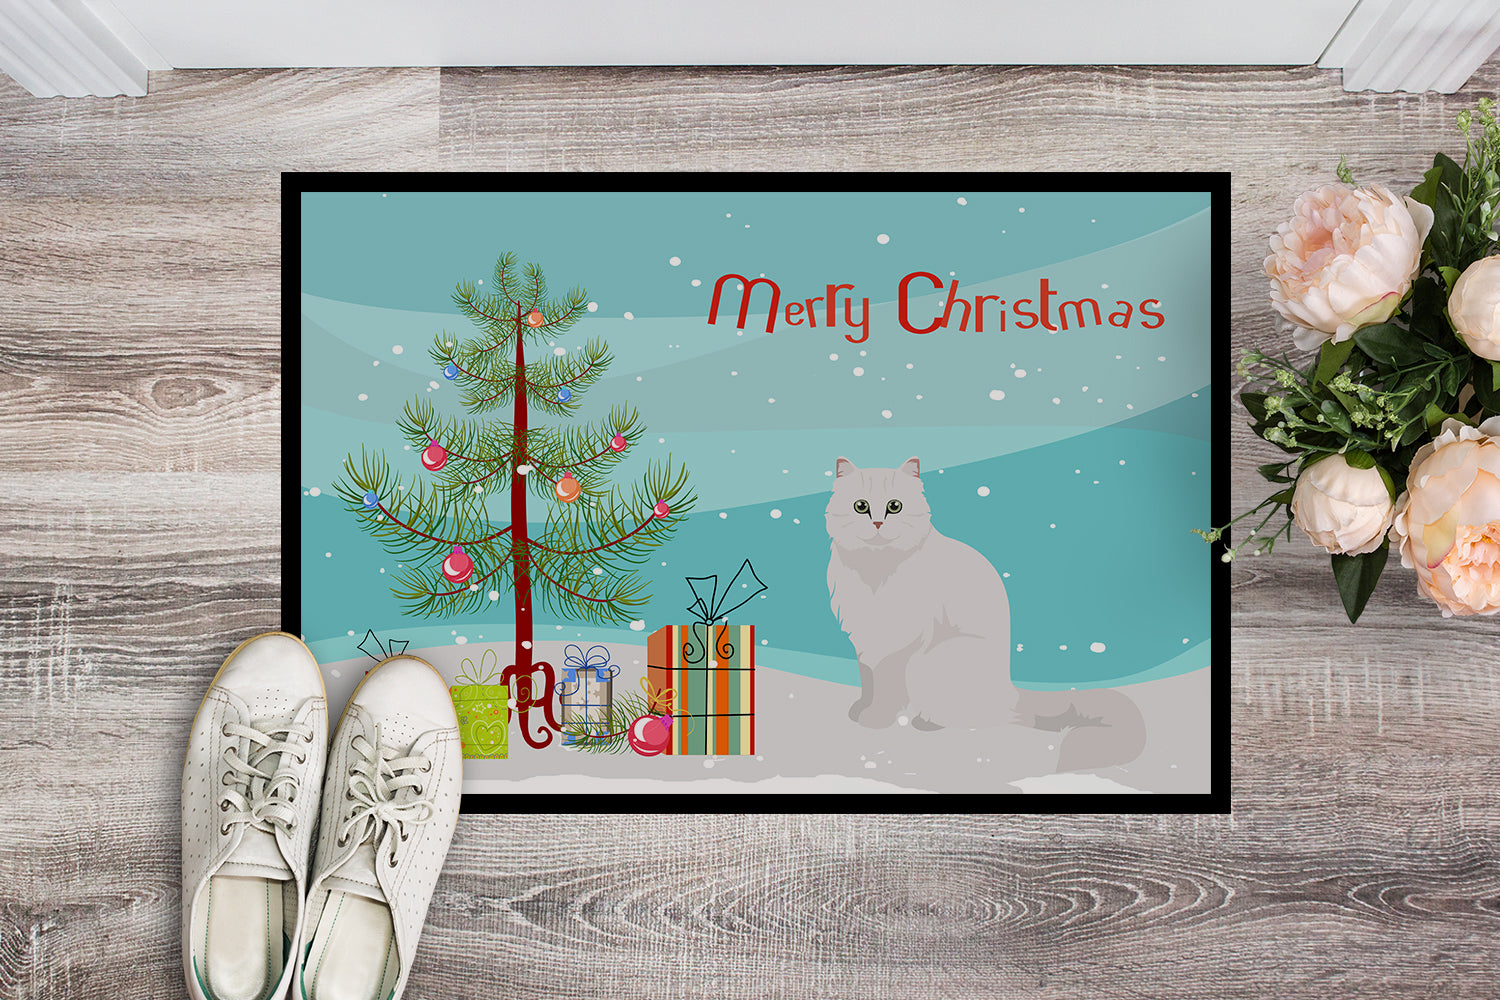 Chinchilla Persian Longhair Cat Merry Christmas Indoor or Outdoor Mat 18x27 CK4758MAT - the-store.com